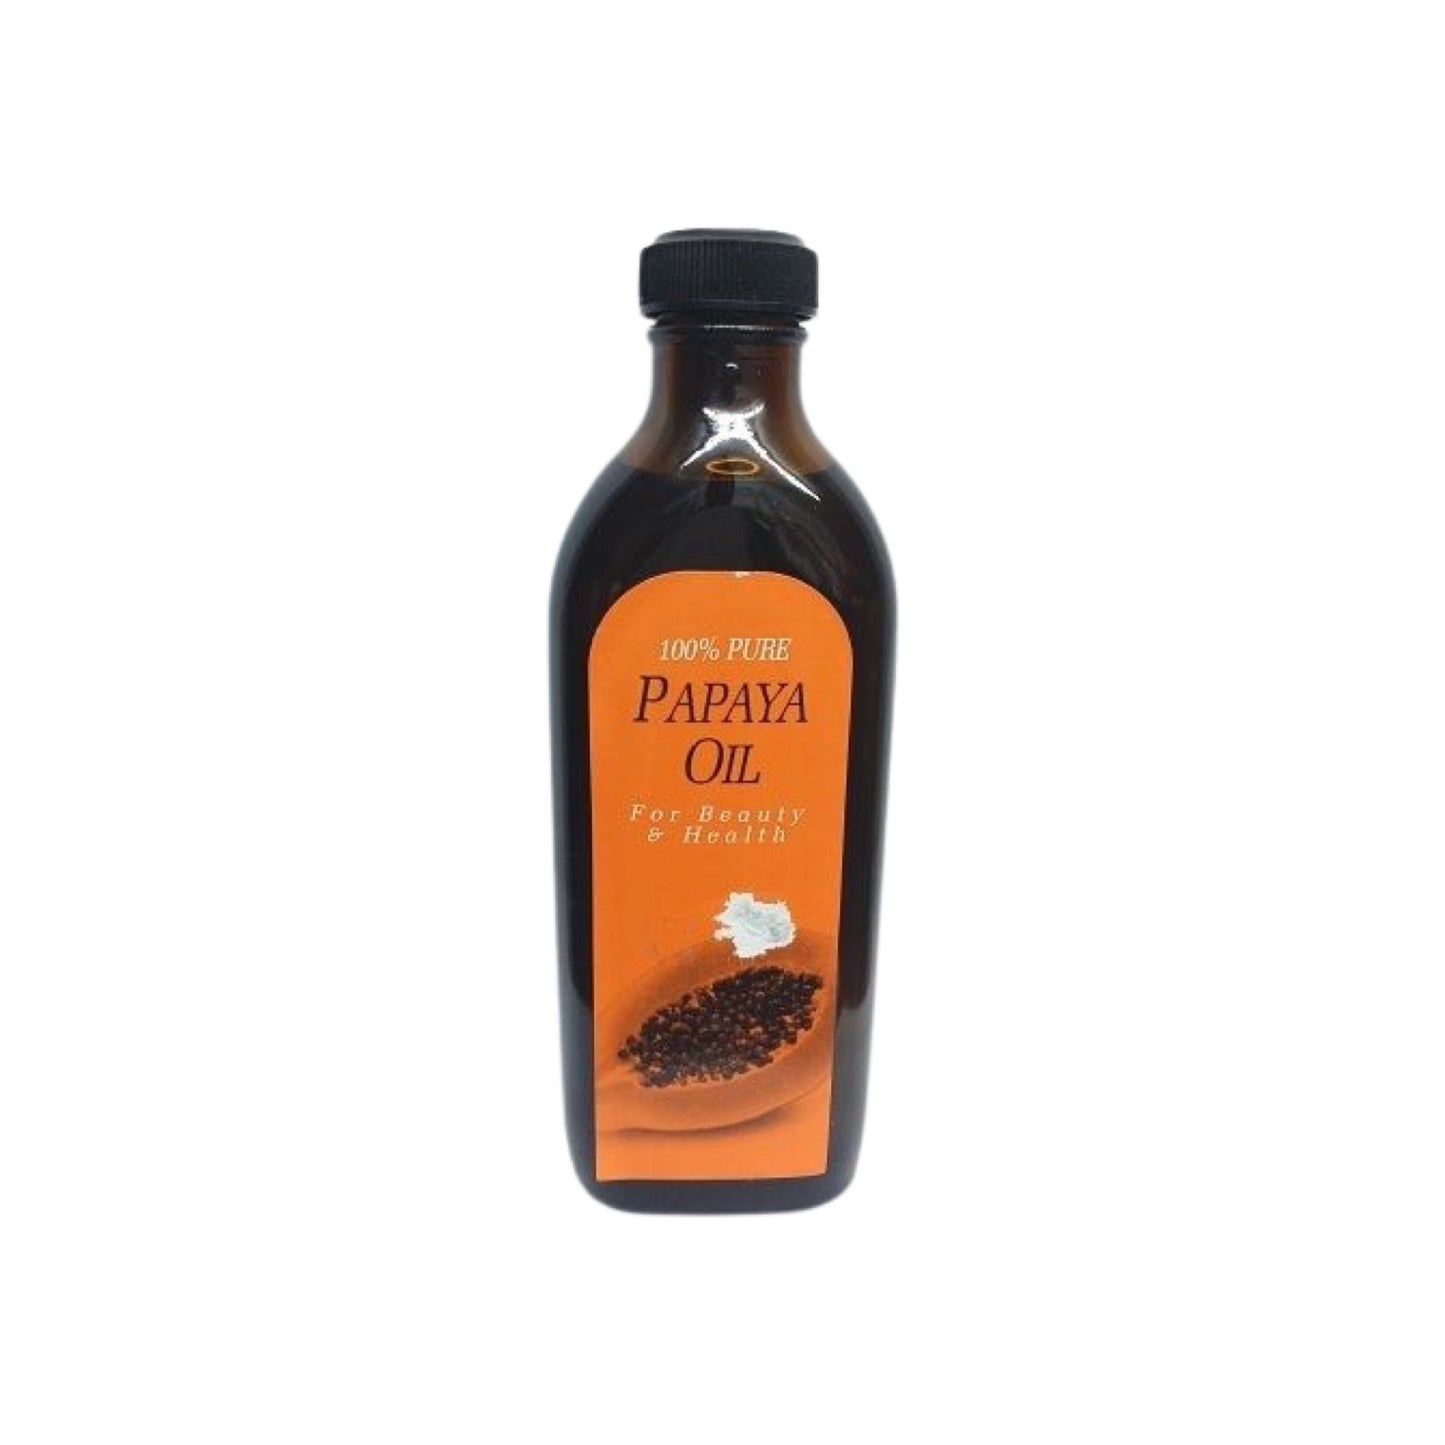 100% Pure Papaya Oil